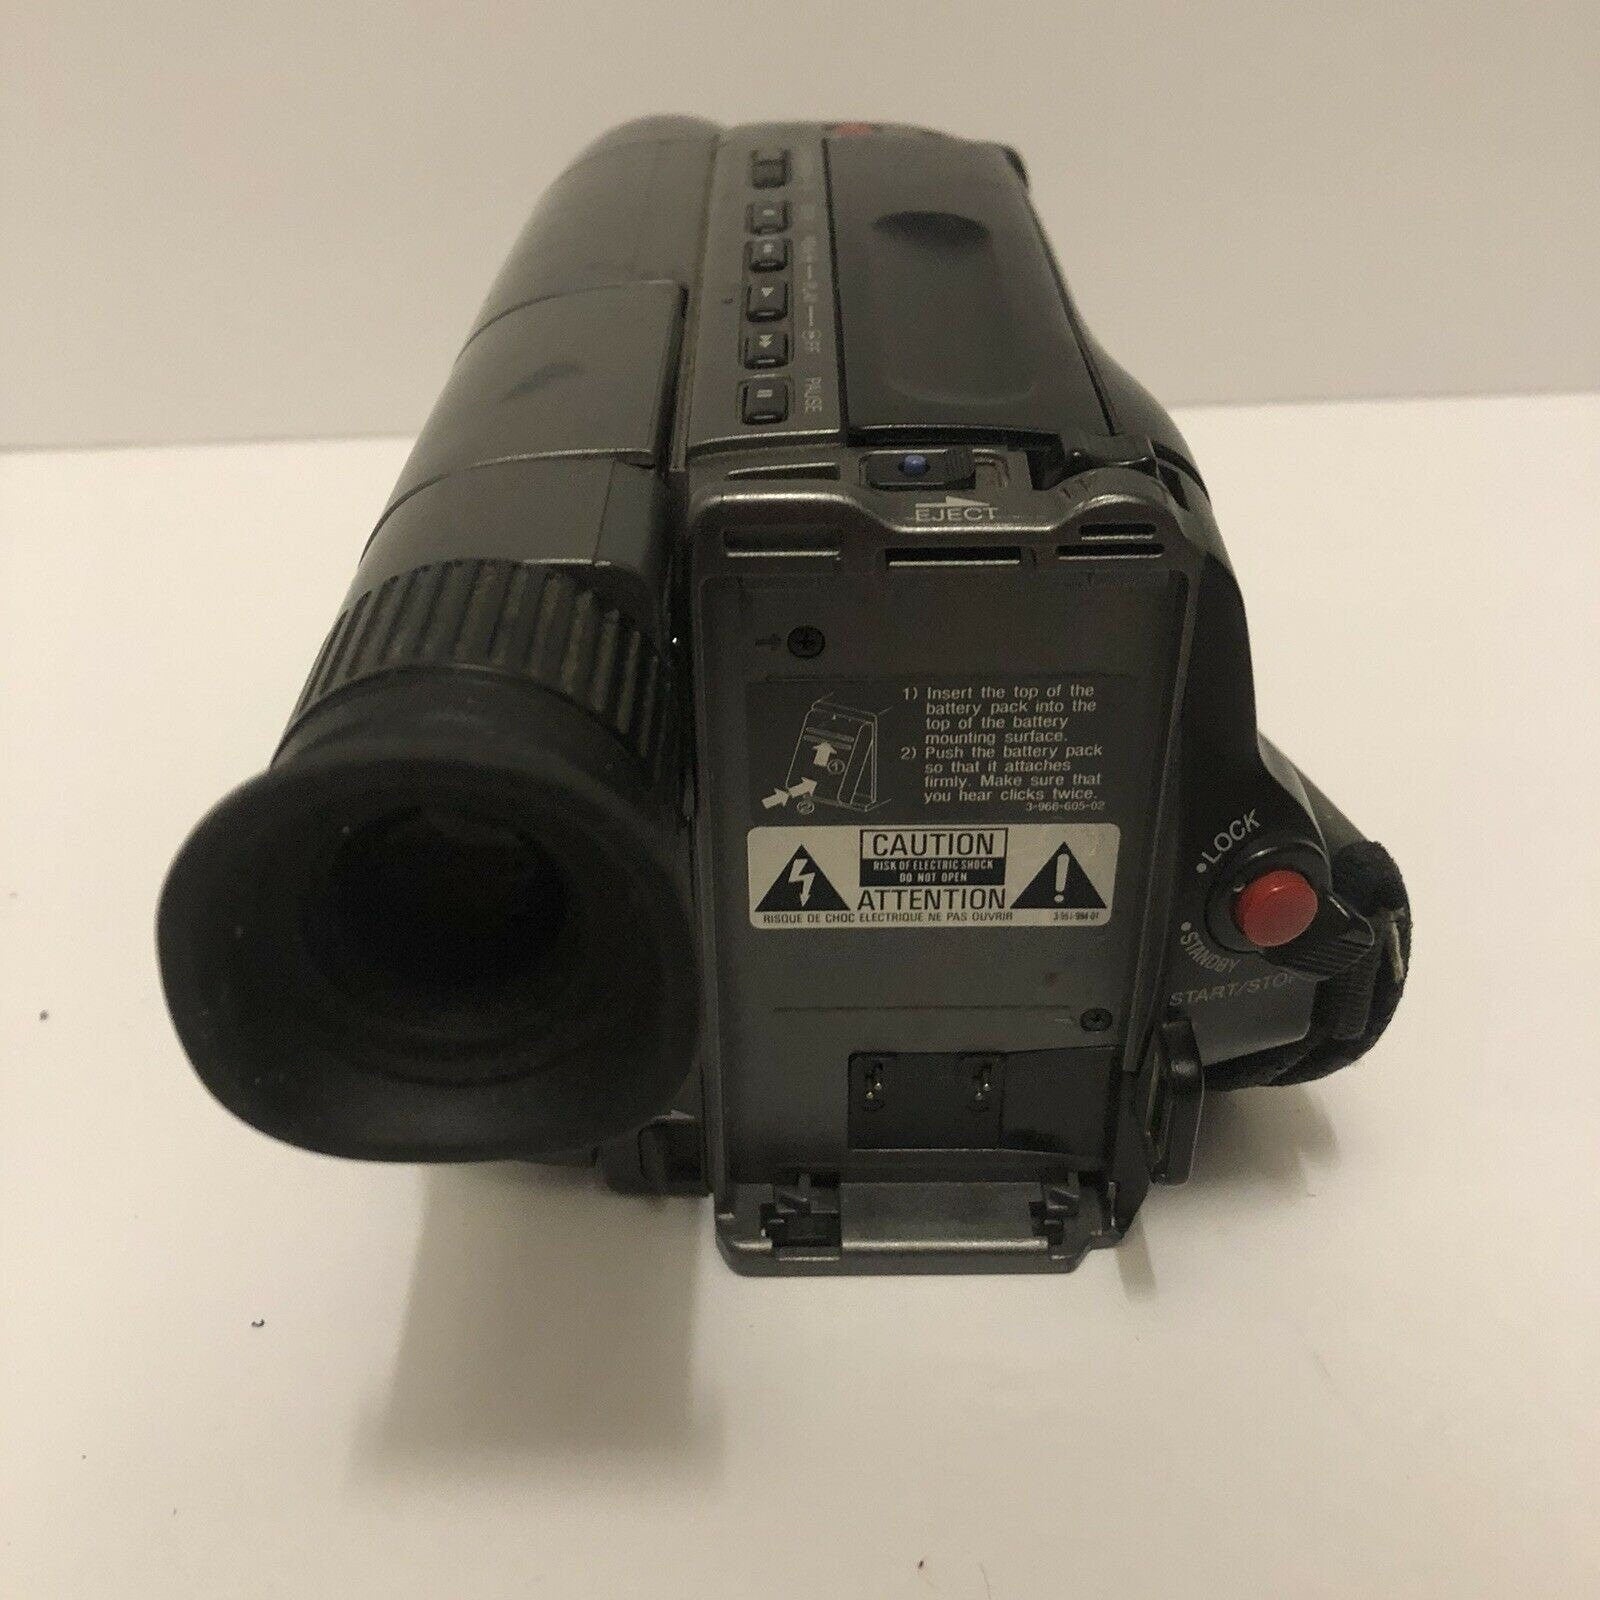 Sony CCD-TRV22 Handycam 8mm Analog Camcorder